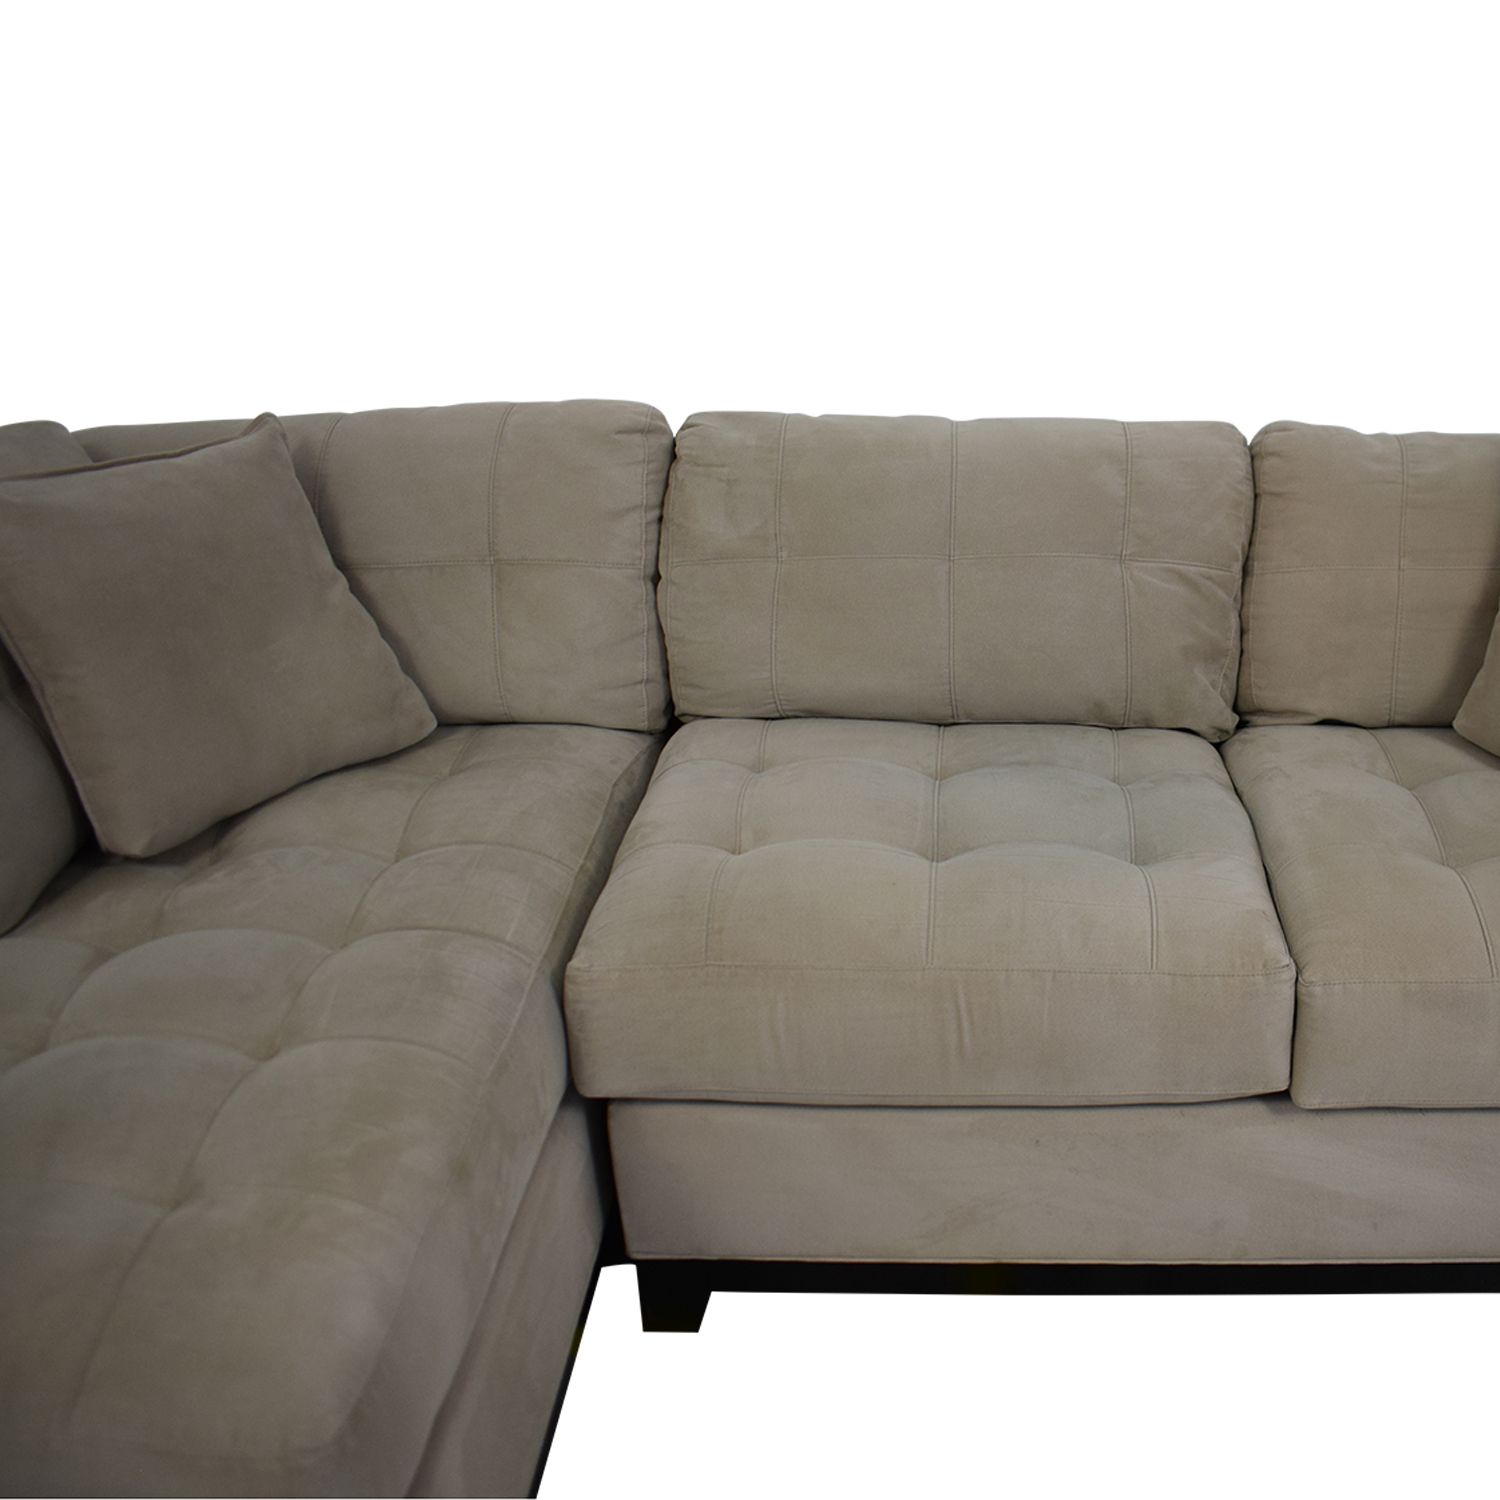 Cindy Crawford Home Metropolis Microfiber Sectional Sofa | Baci Living Room Pertaining To Microfiber Sectional Corner Sofas (View 10 of 20)